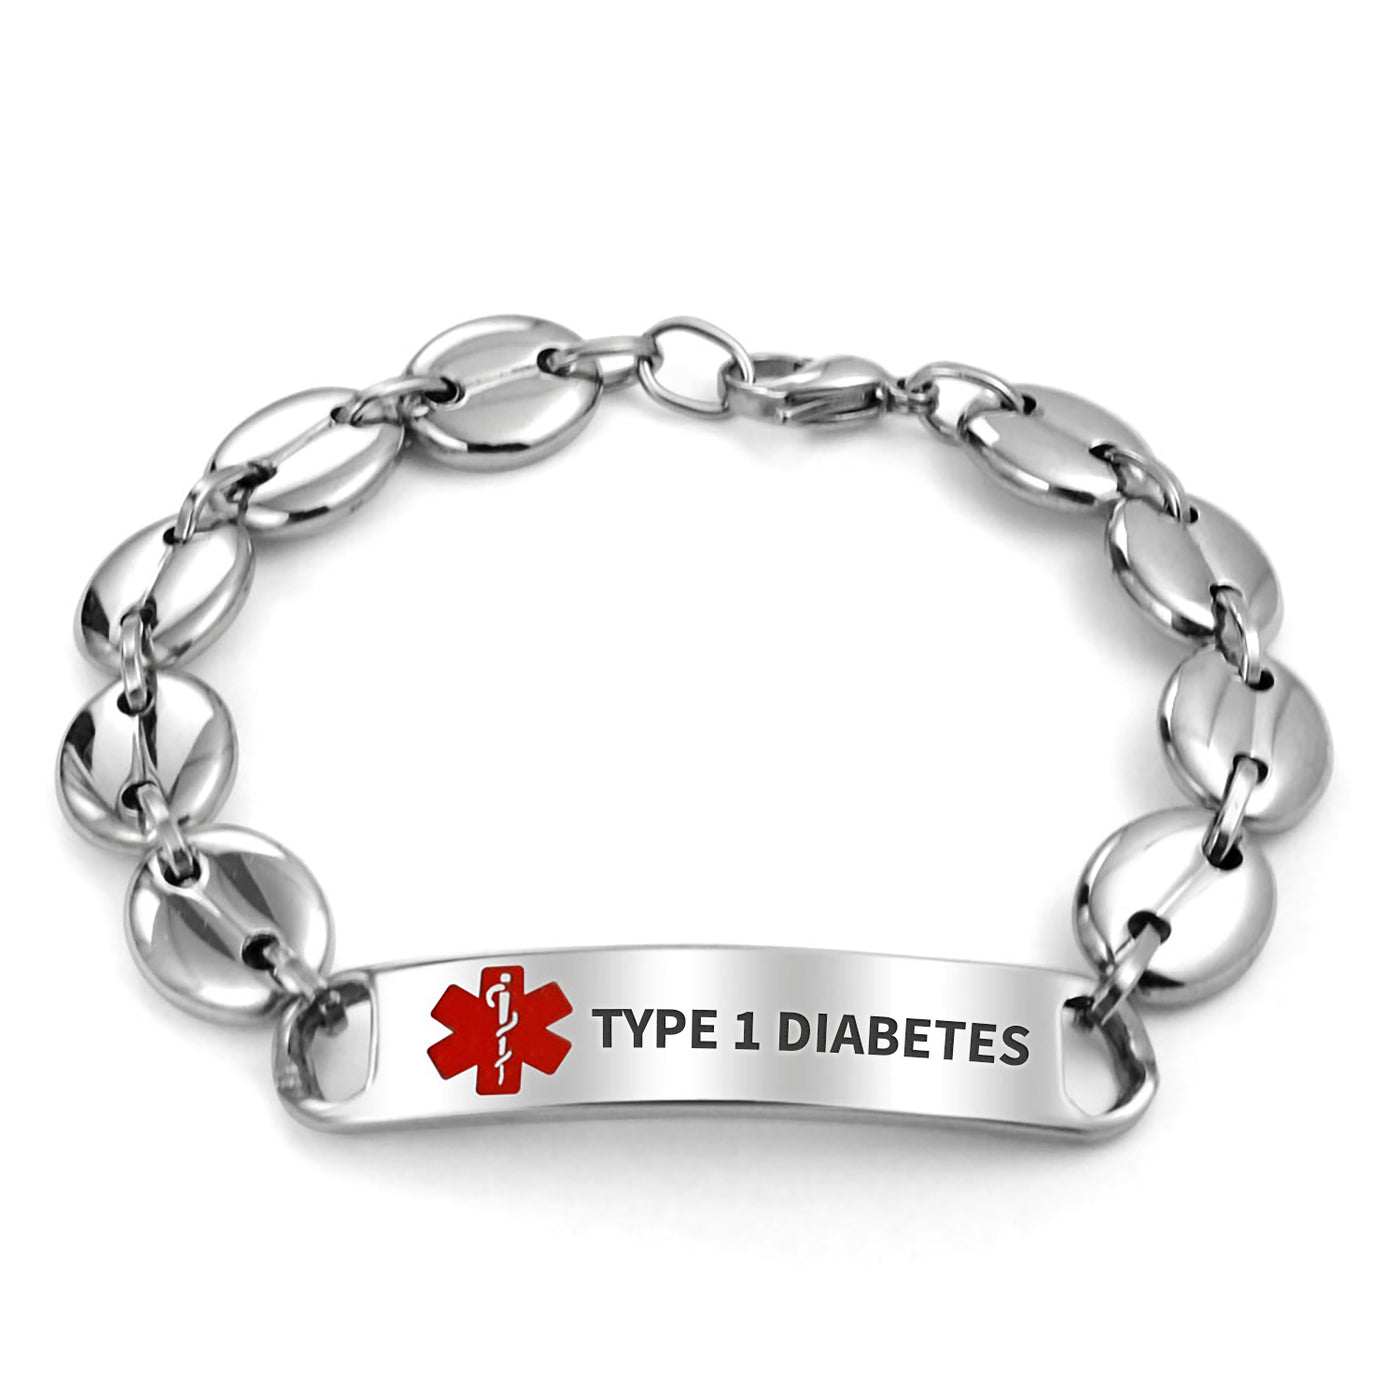 Type 1 diabetes | Image2